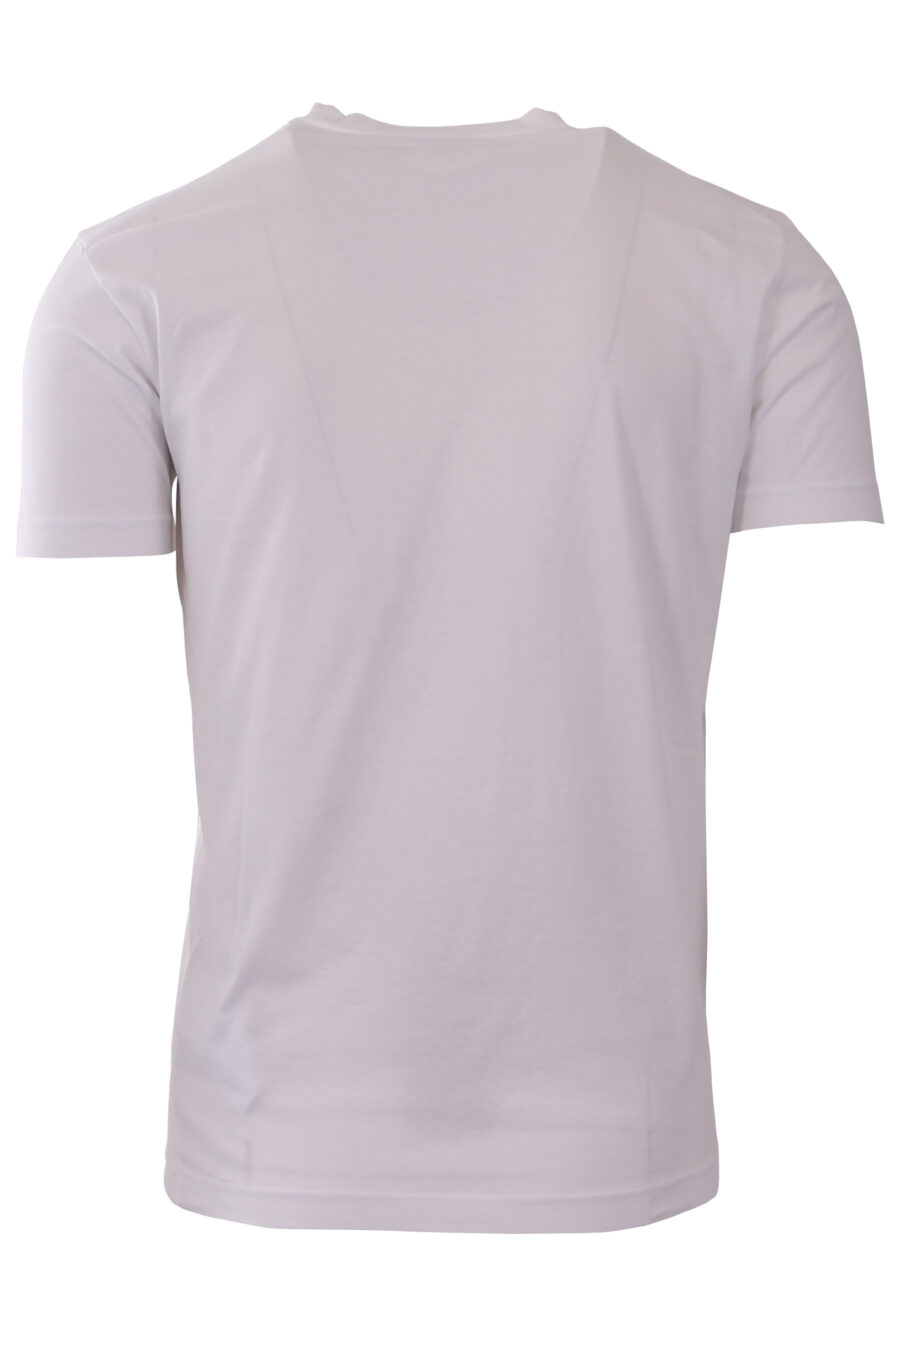 T-shirt blanc avec maxilogo "milano italy" - IMG 1839